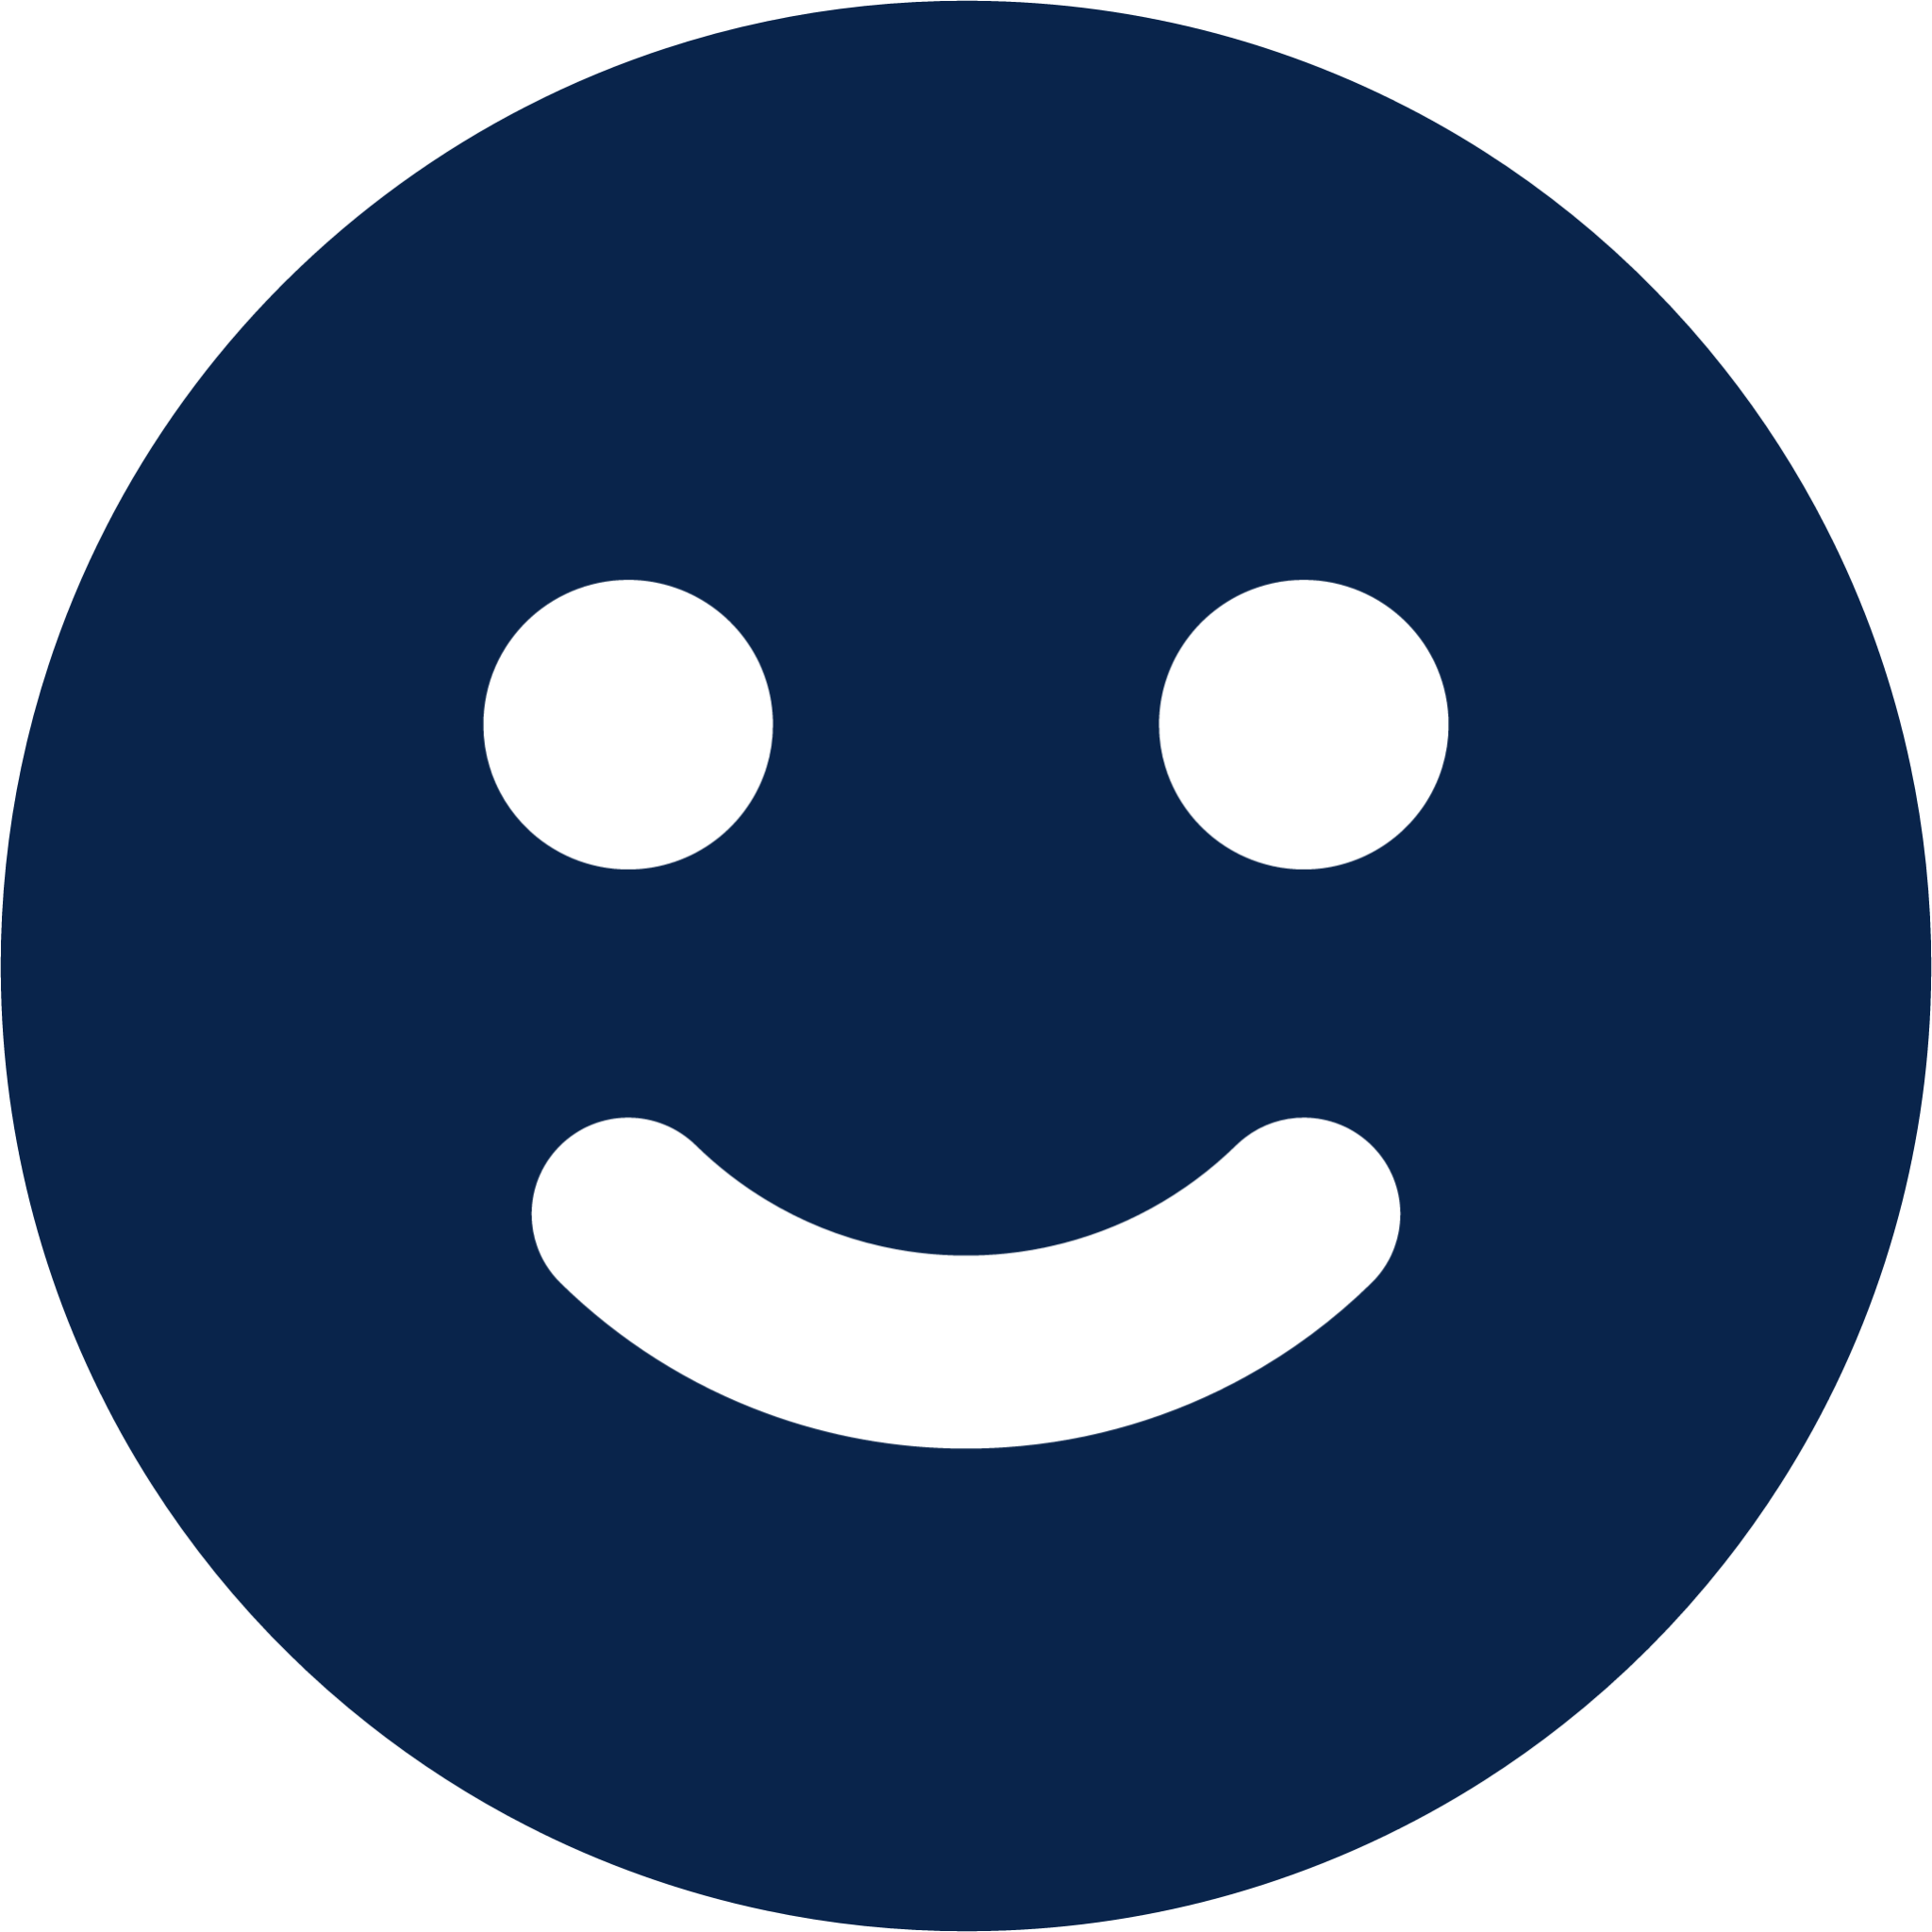 emoji fill editor icon